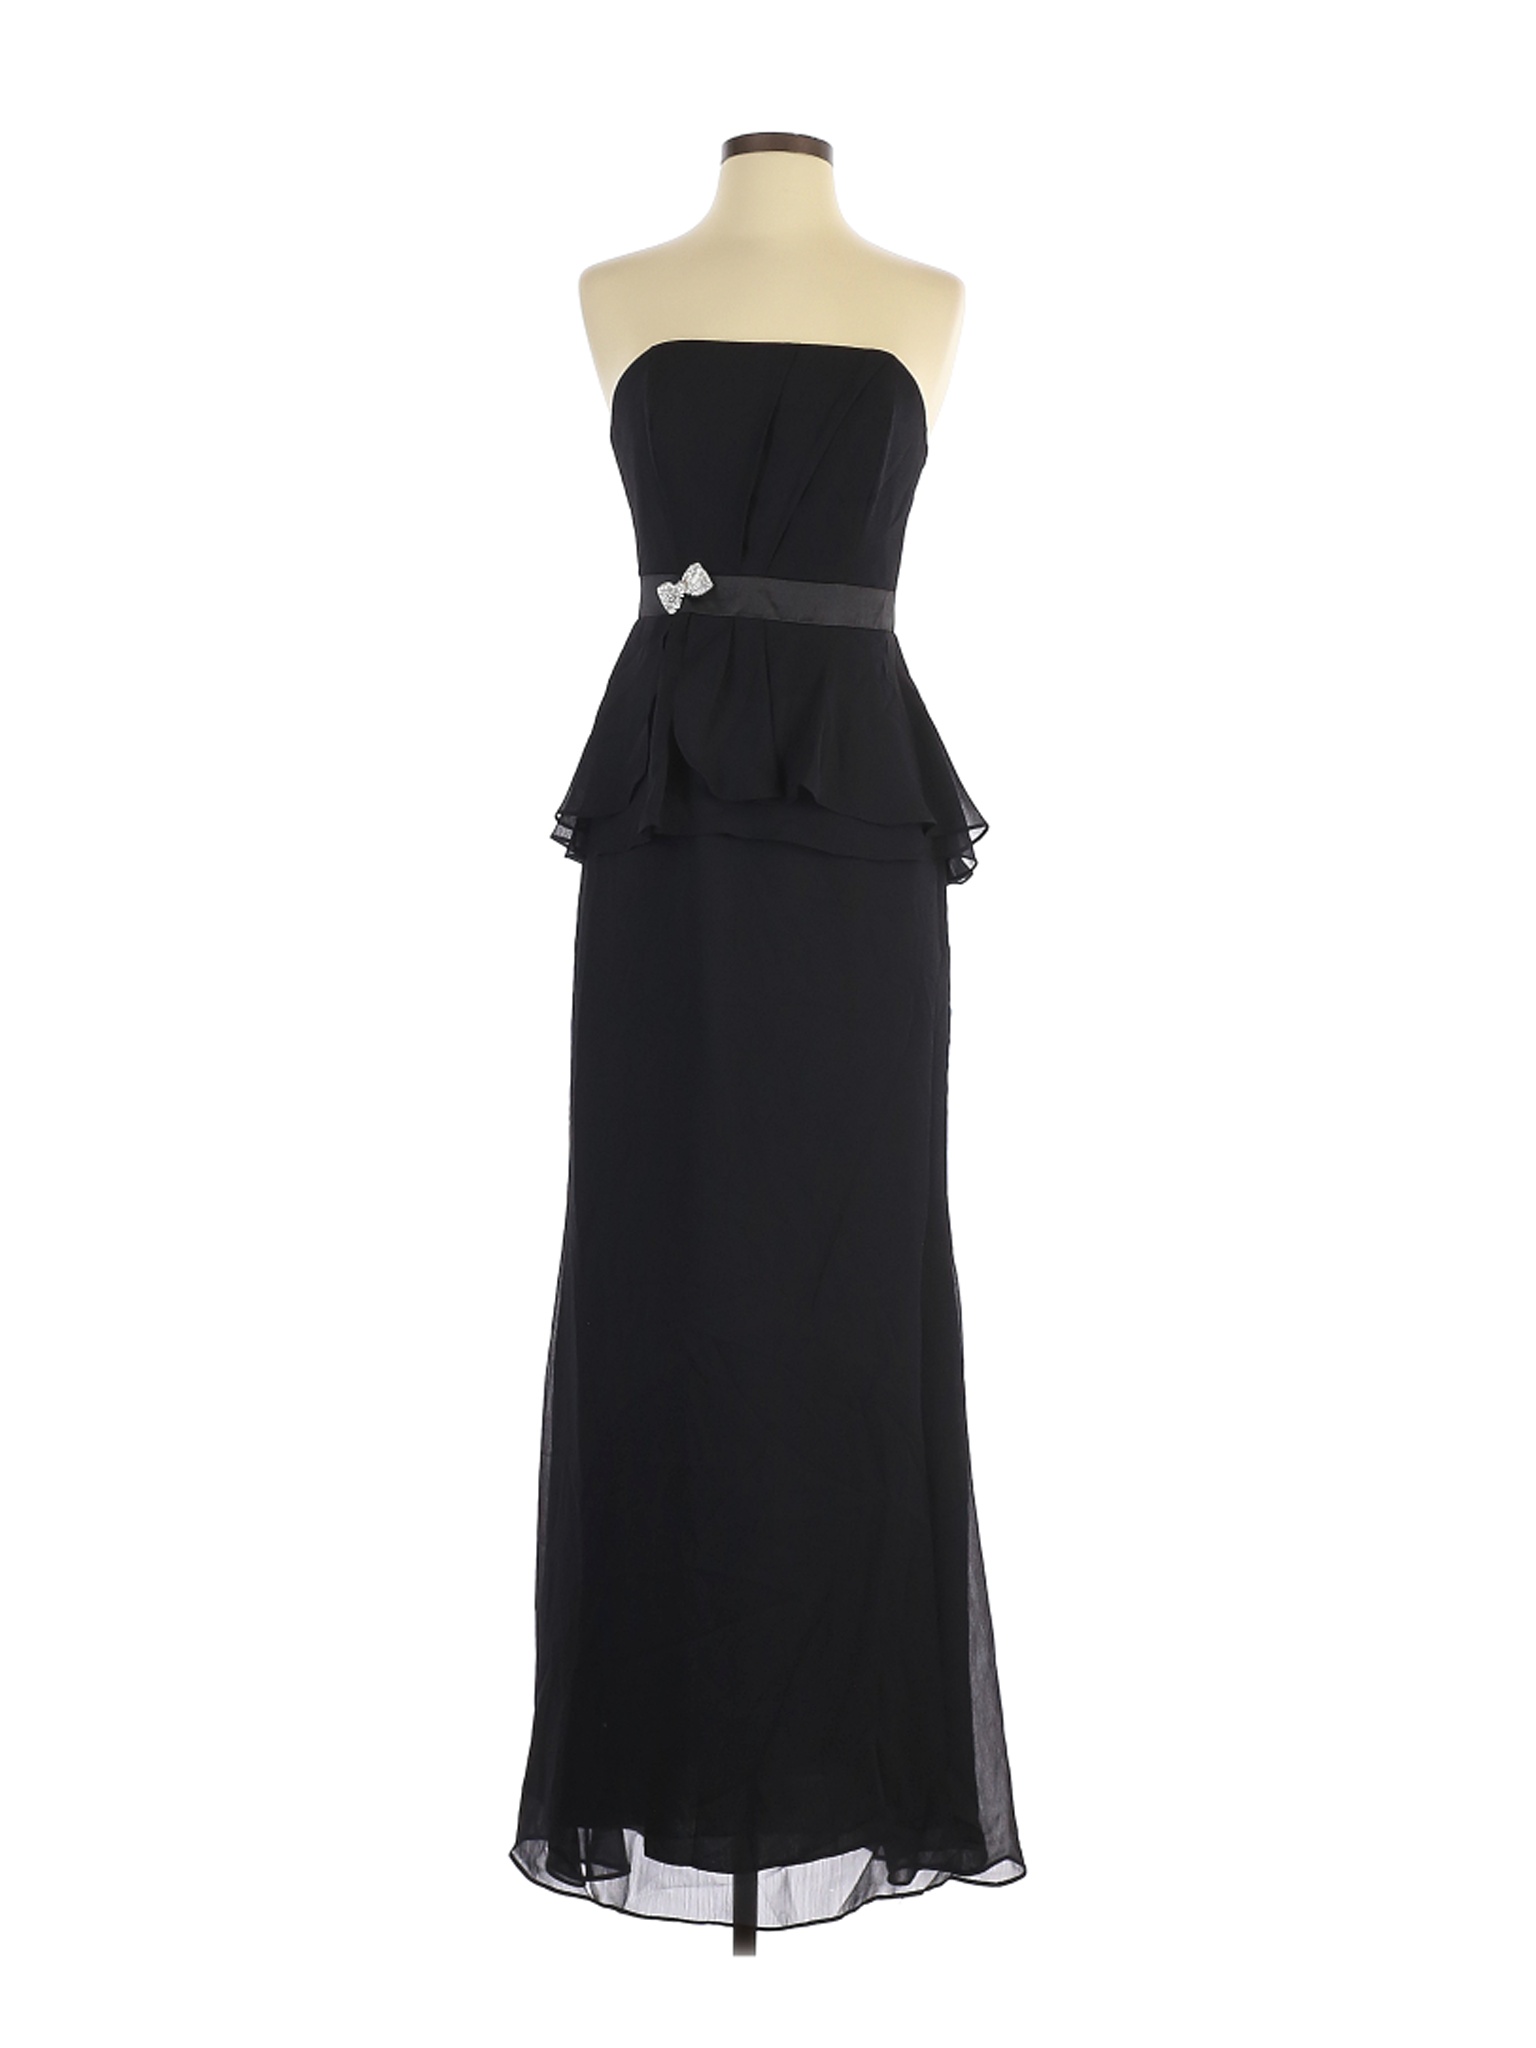 David's Bridal Women Black Cocktail Dress 4 | eBay